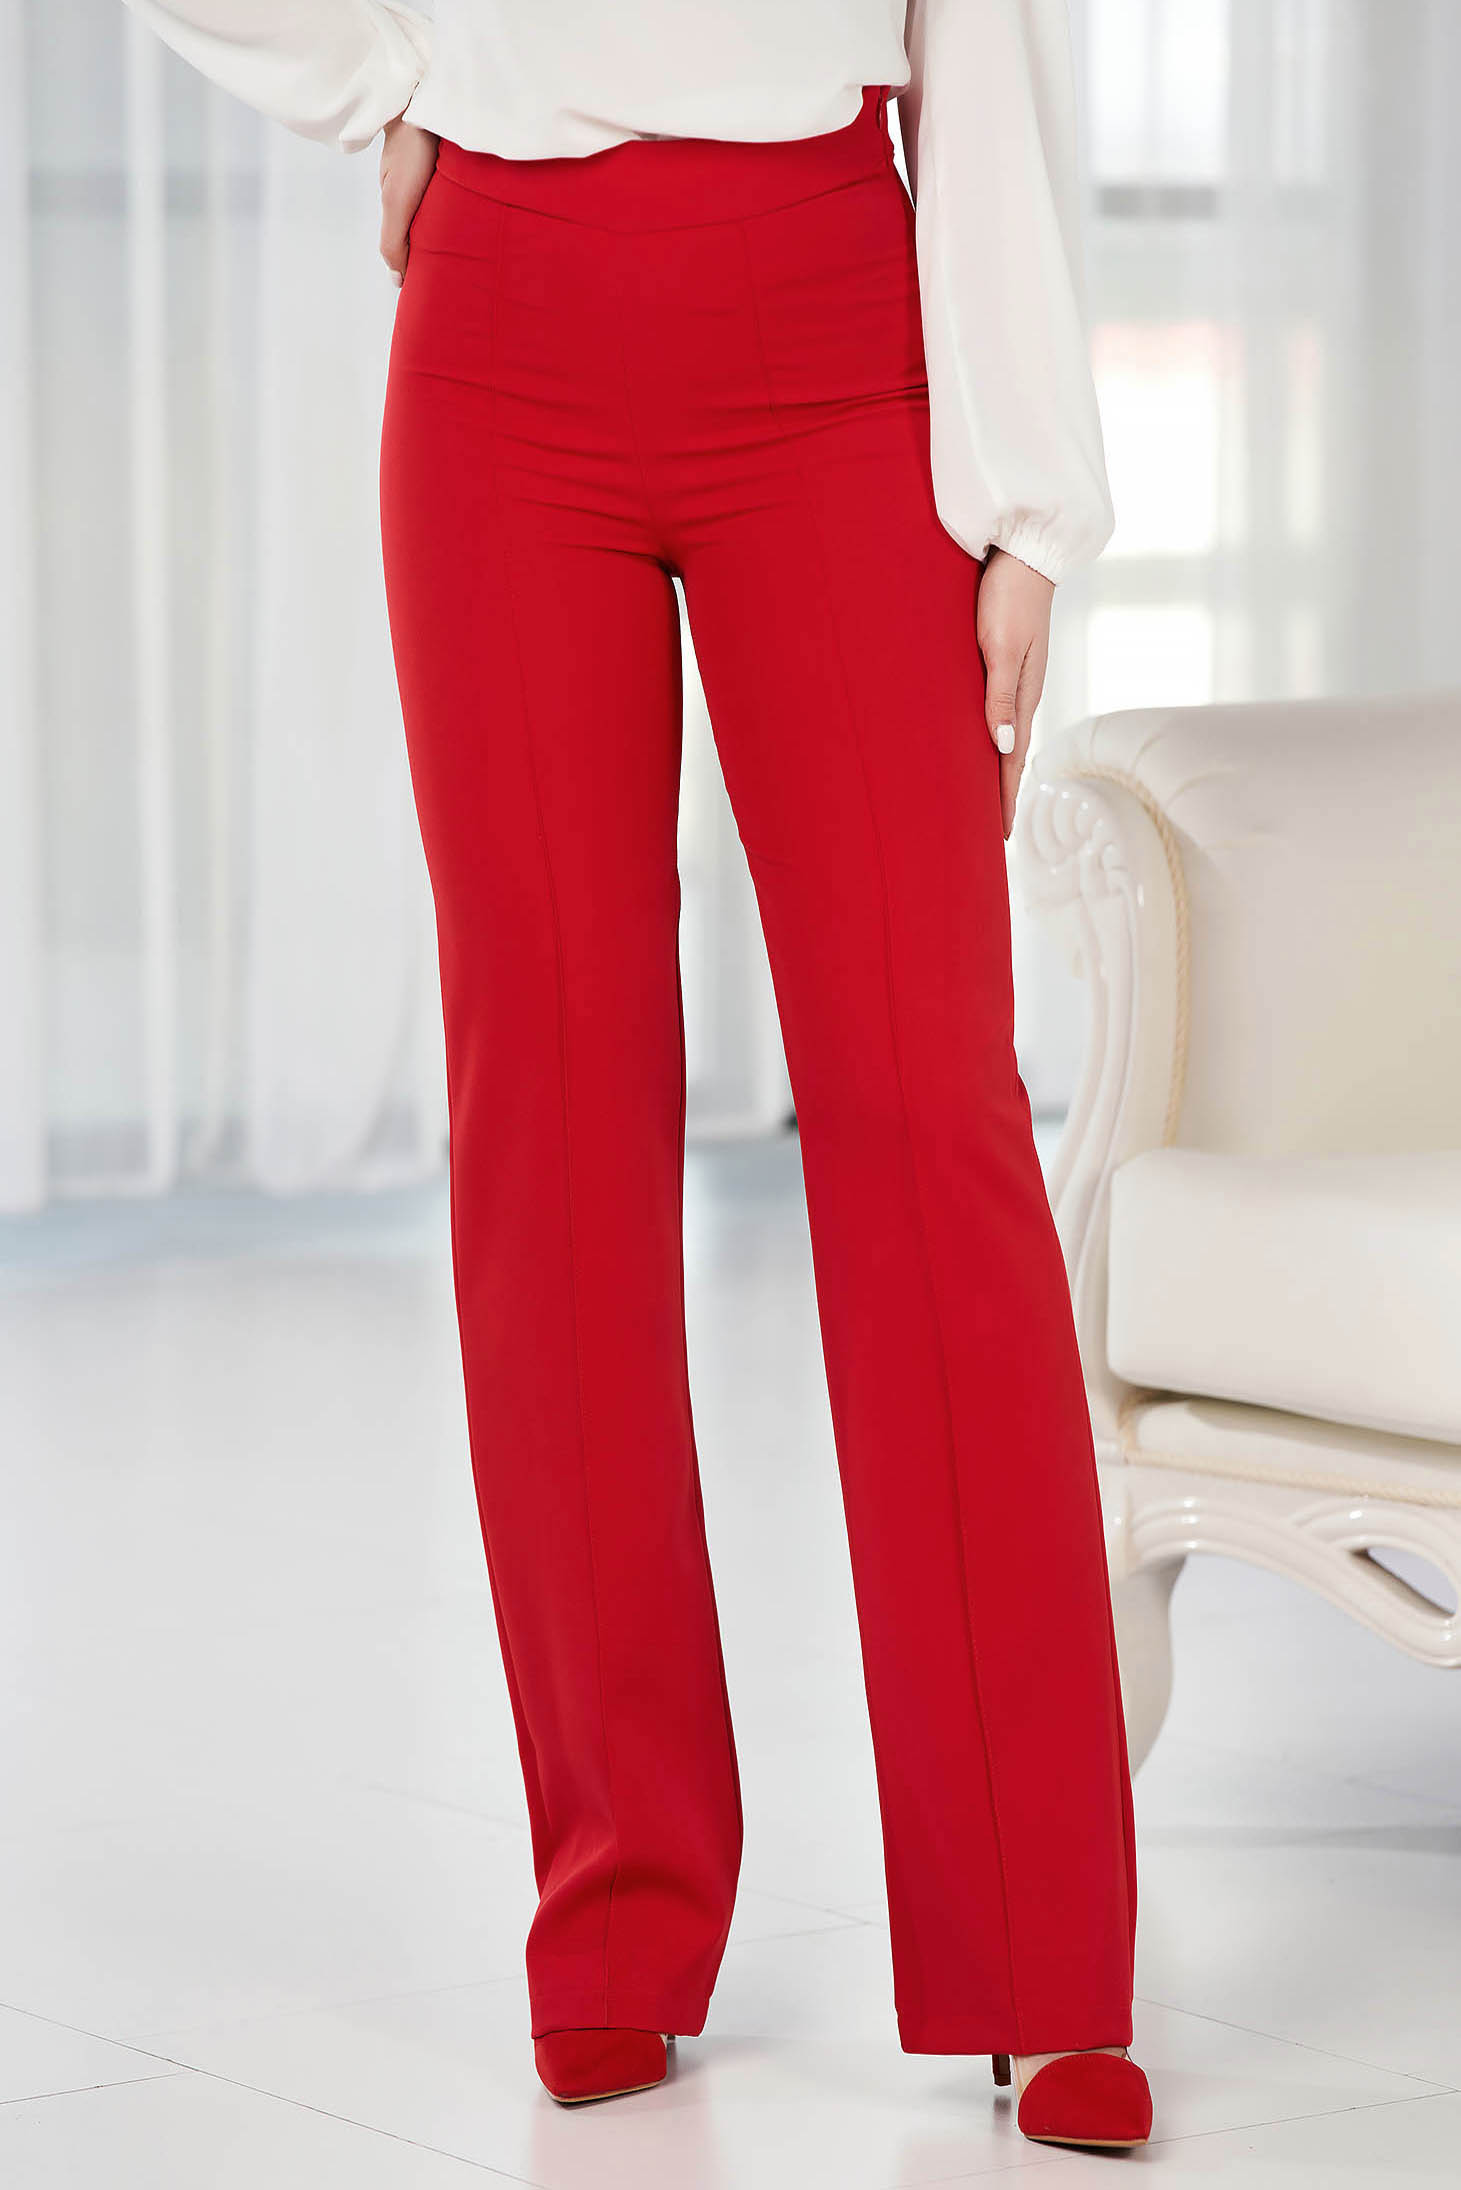 Pantaloni din stofa usor elastica rosii lungi evazati cu talie inalta - StarShinerS 1 - StarShinerS.ro